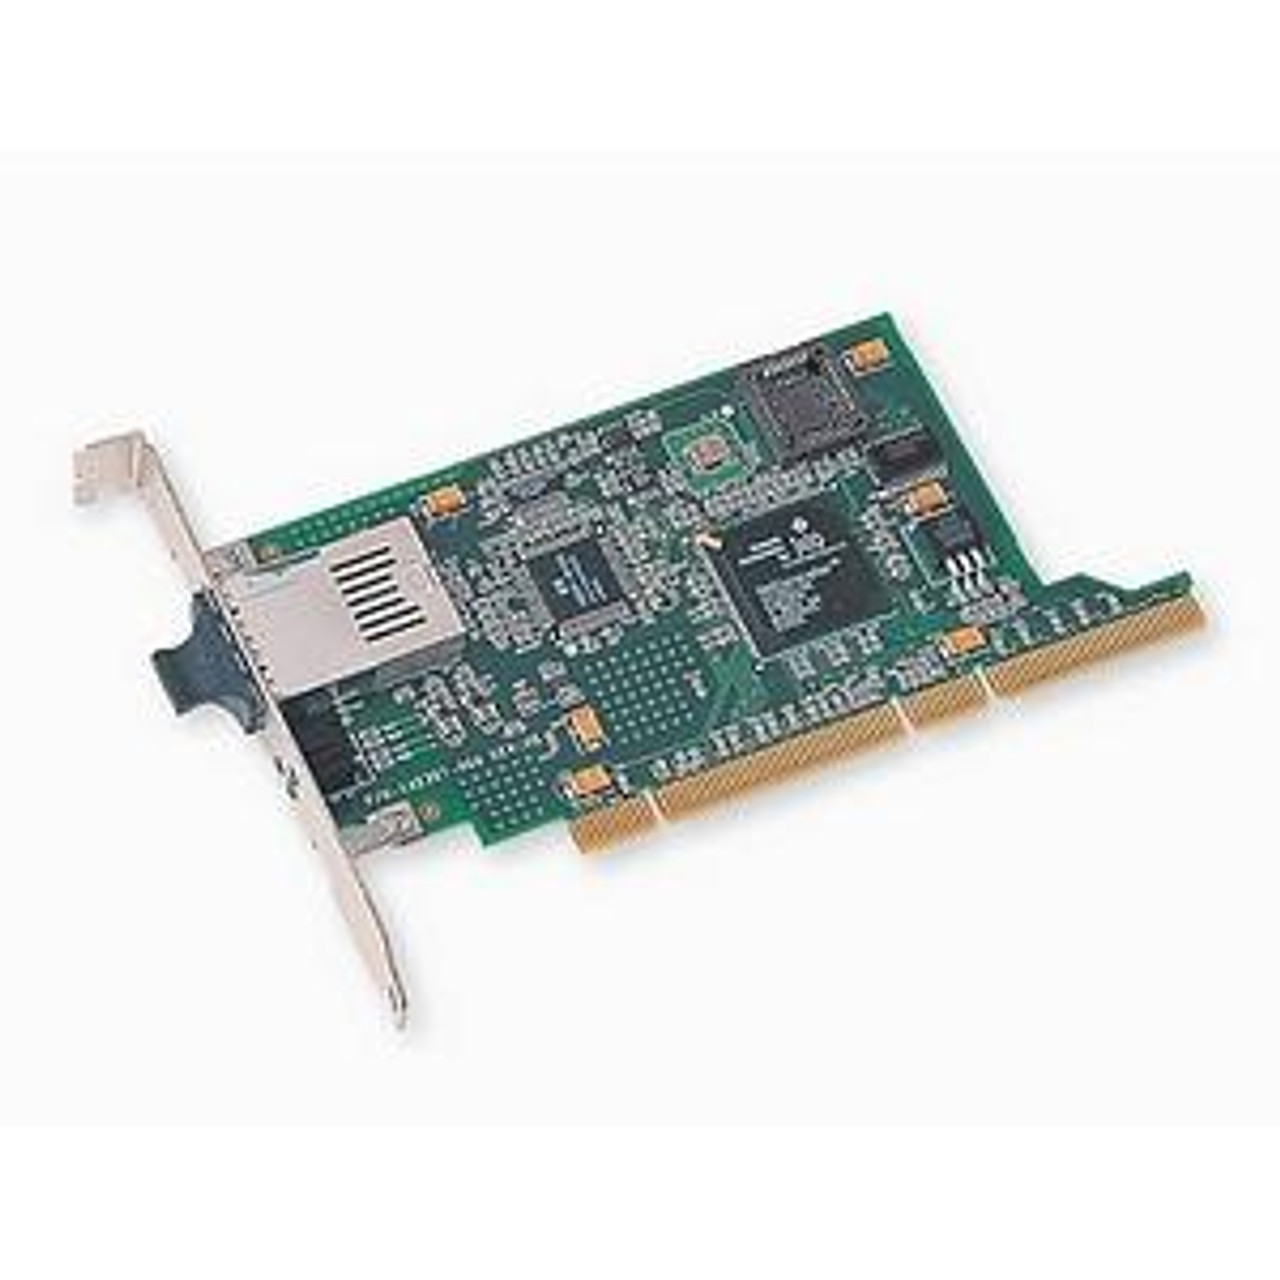 SMC9462SX SMC TigerCard 1000Mbps PCI